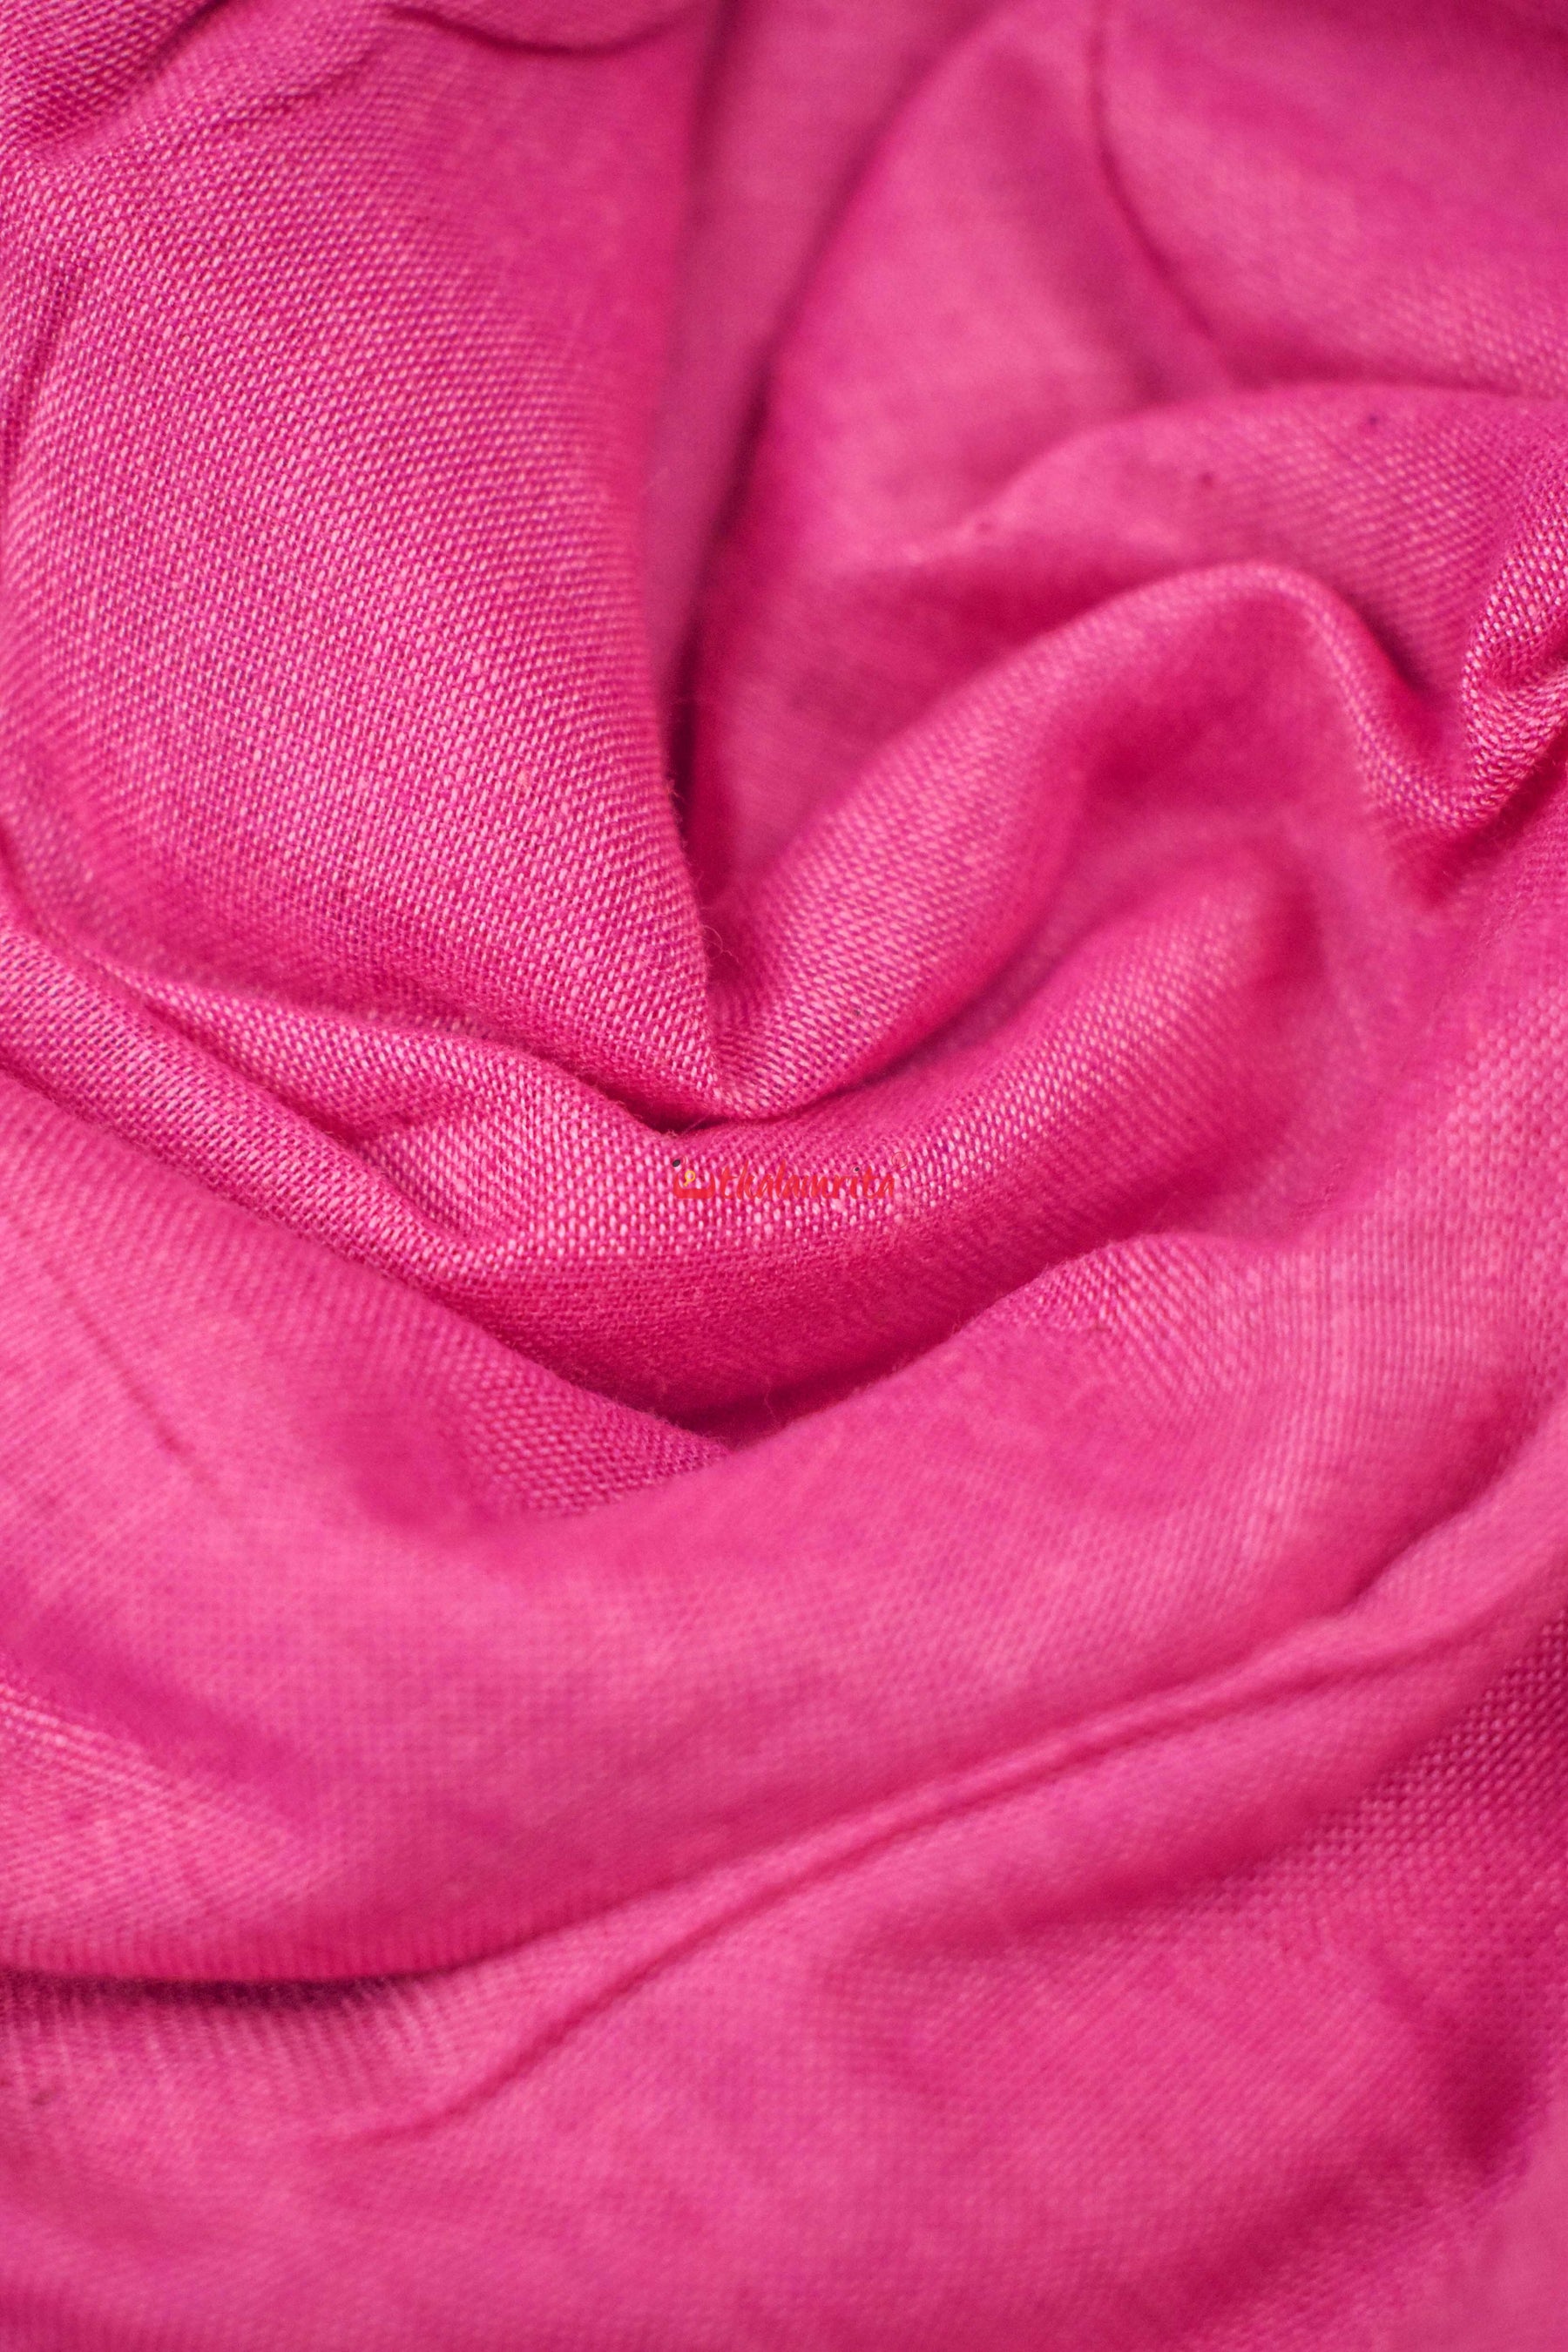 Plain Pink (Fabric)